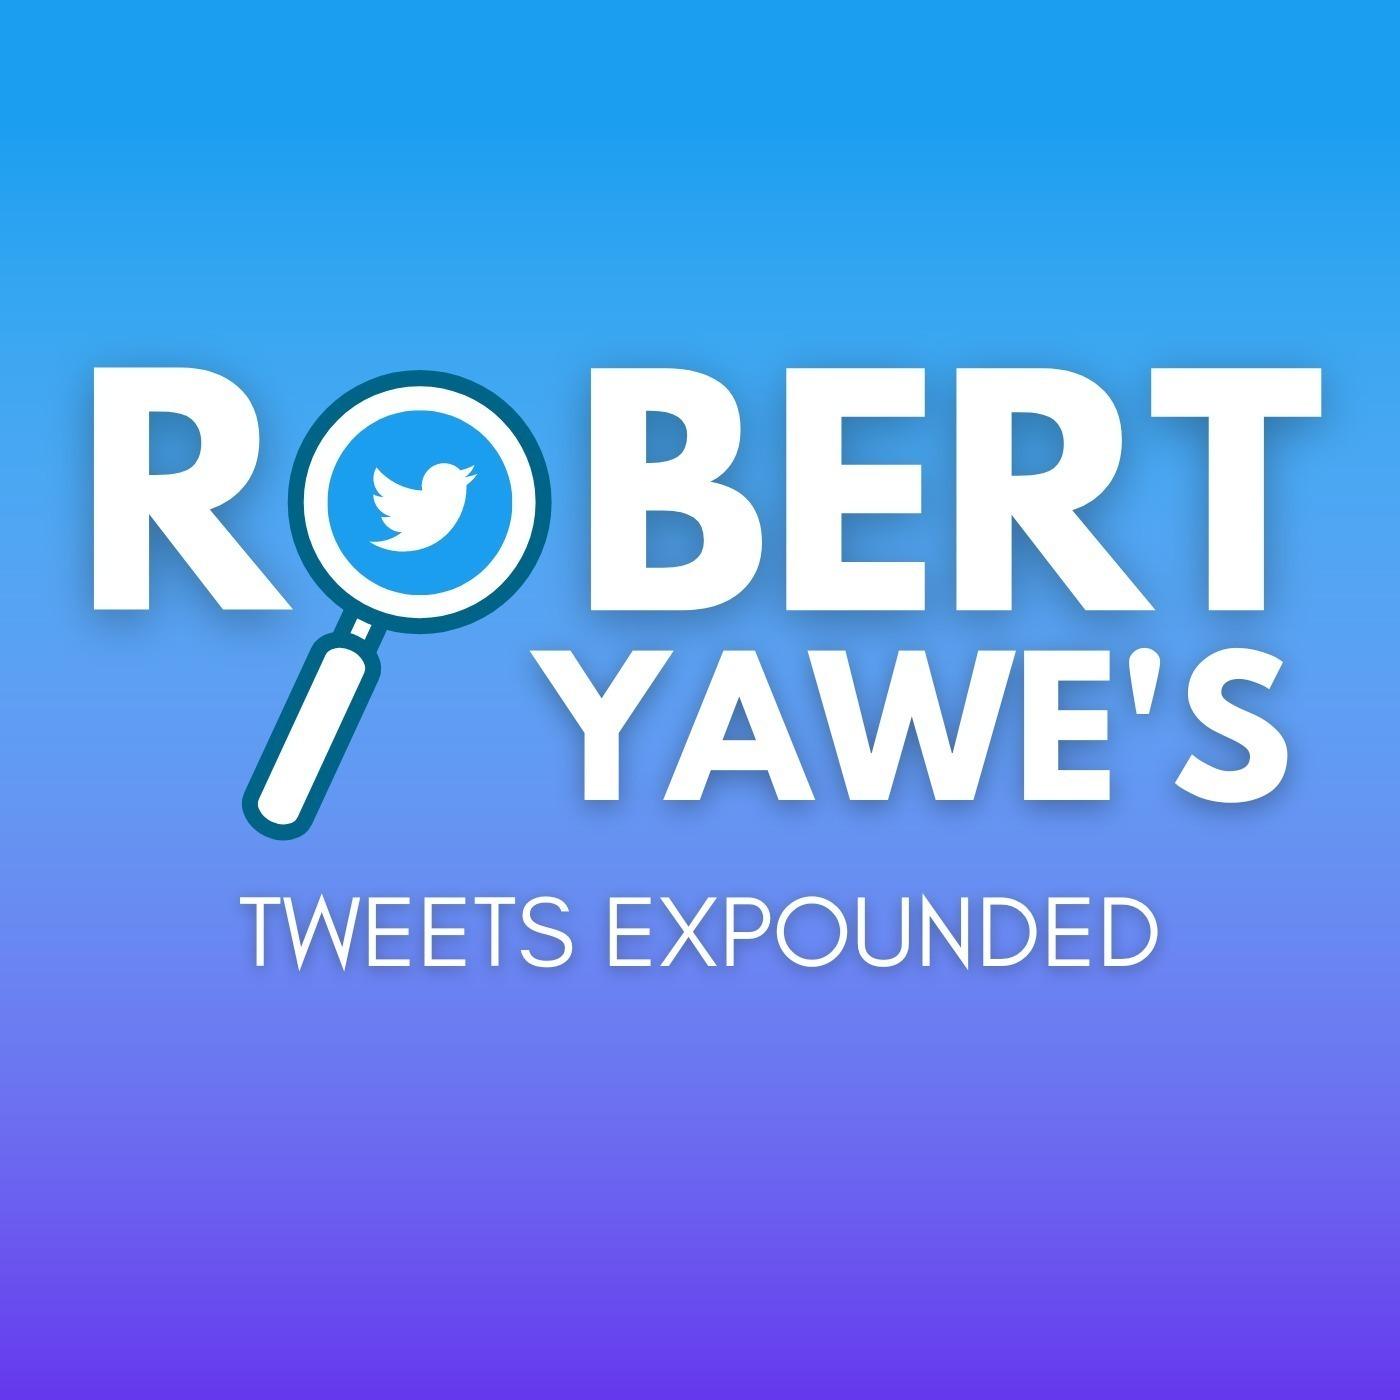 Robert Yawe's Tweets Expounded